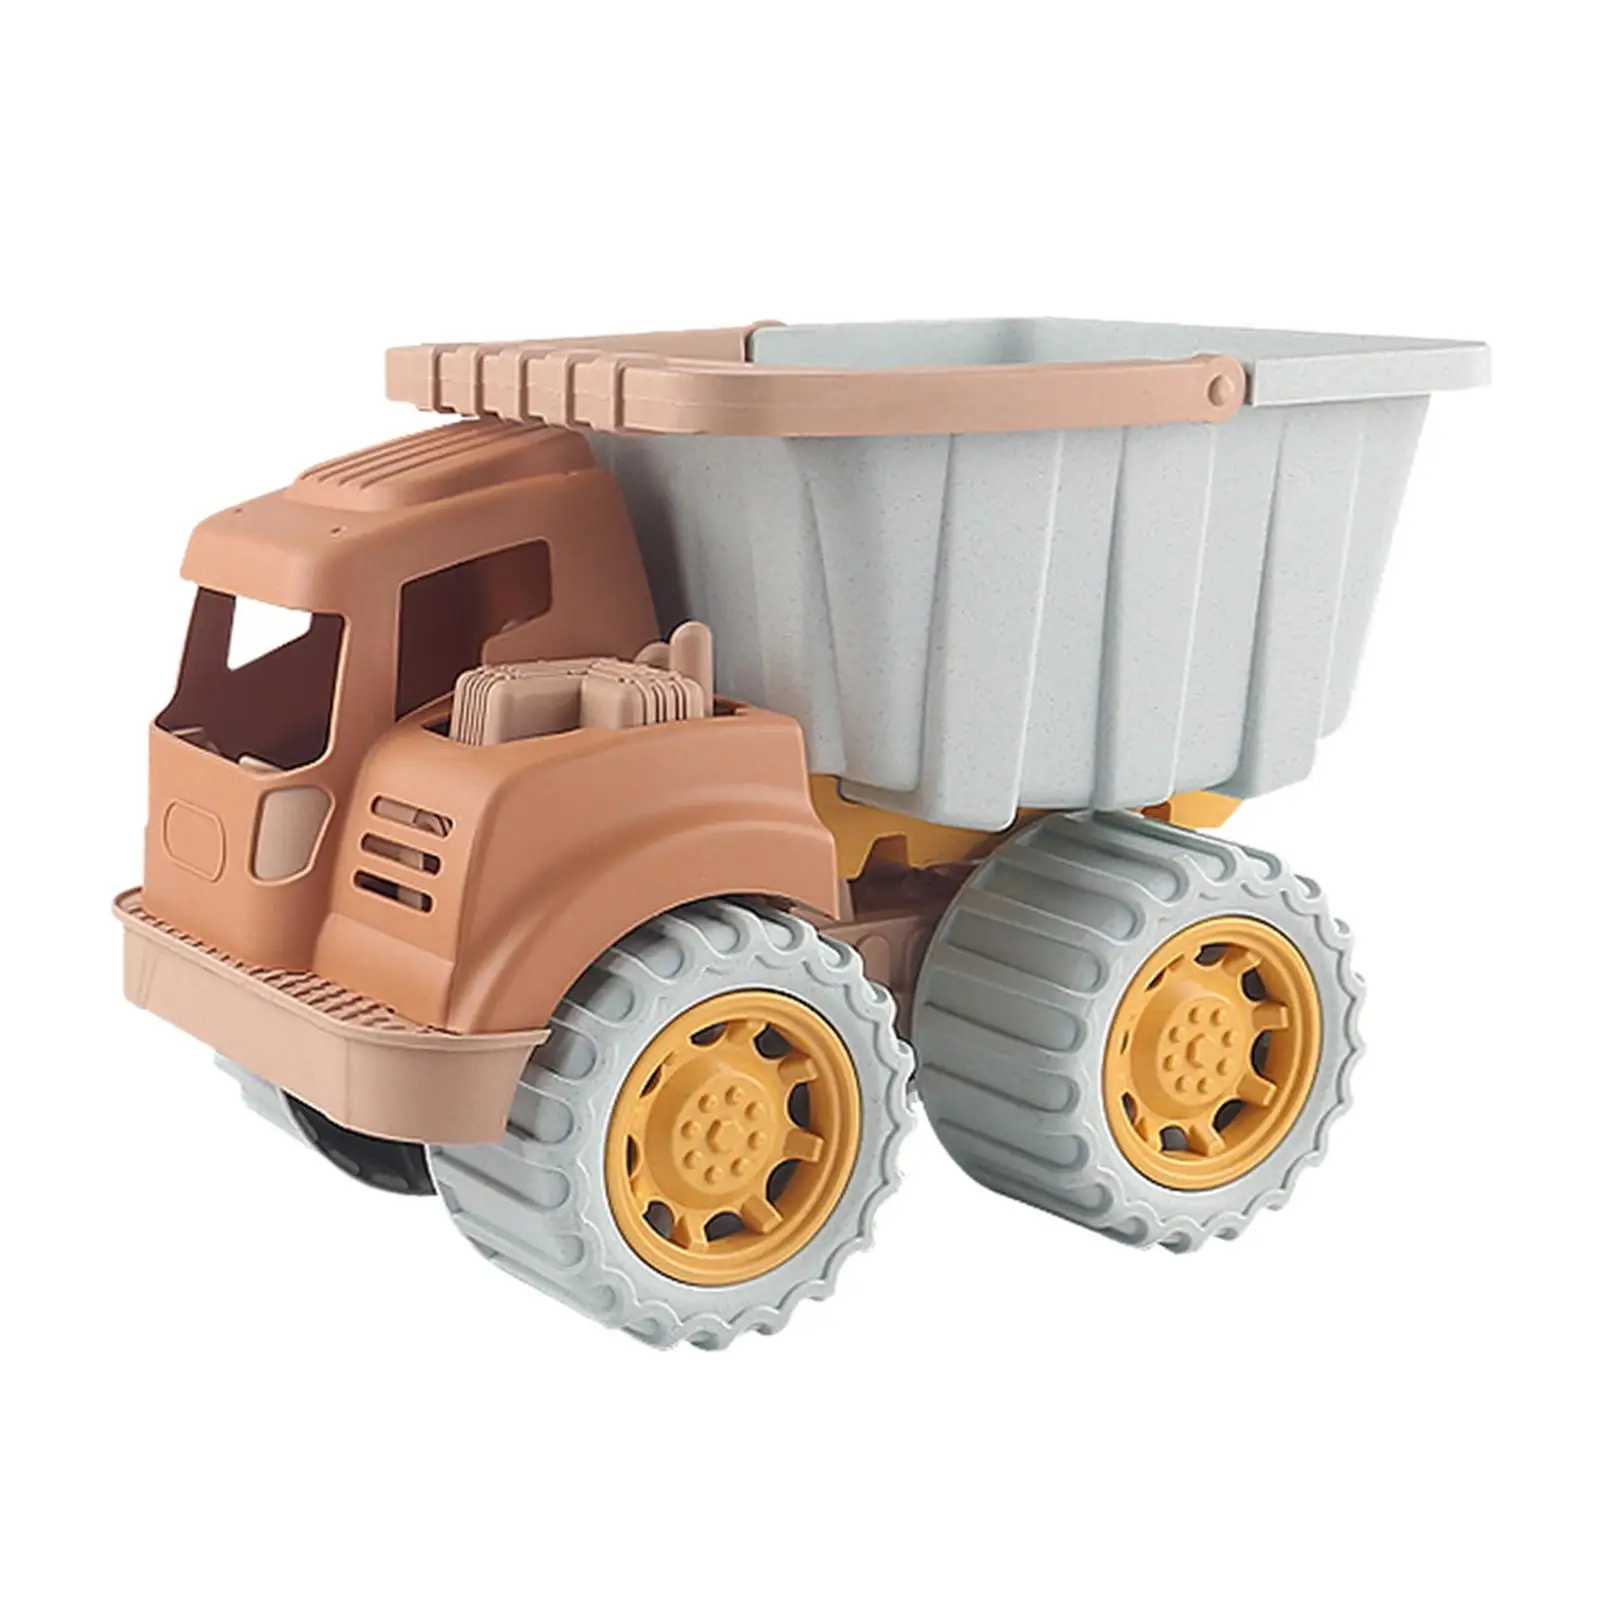 Beach Toy Dump Trucks Sturdy Gross Motor Construction Vehicles Sand Truck for Sand Beach Toy Birthday Gift 3 4 5 Year Old Kids